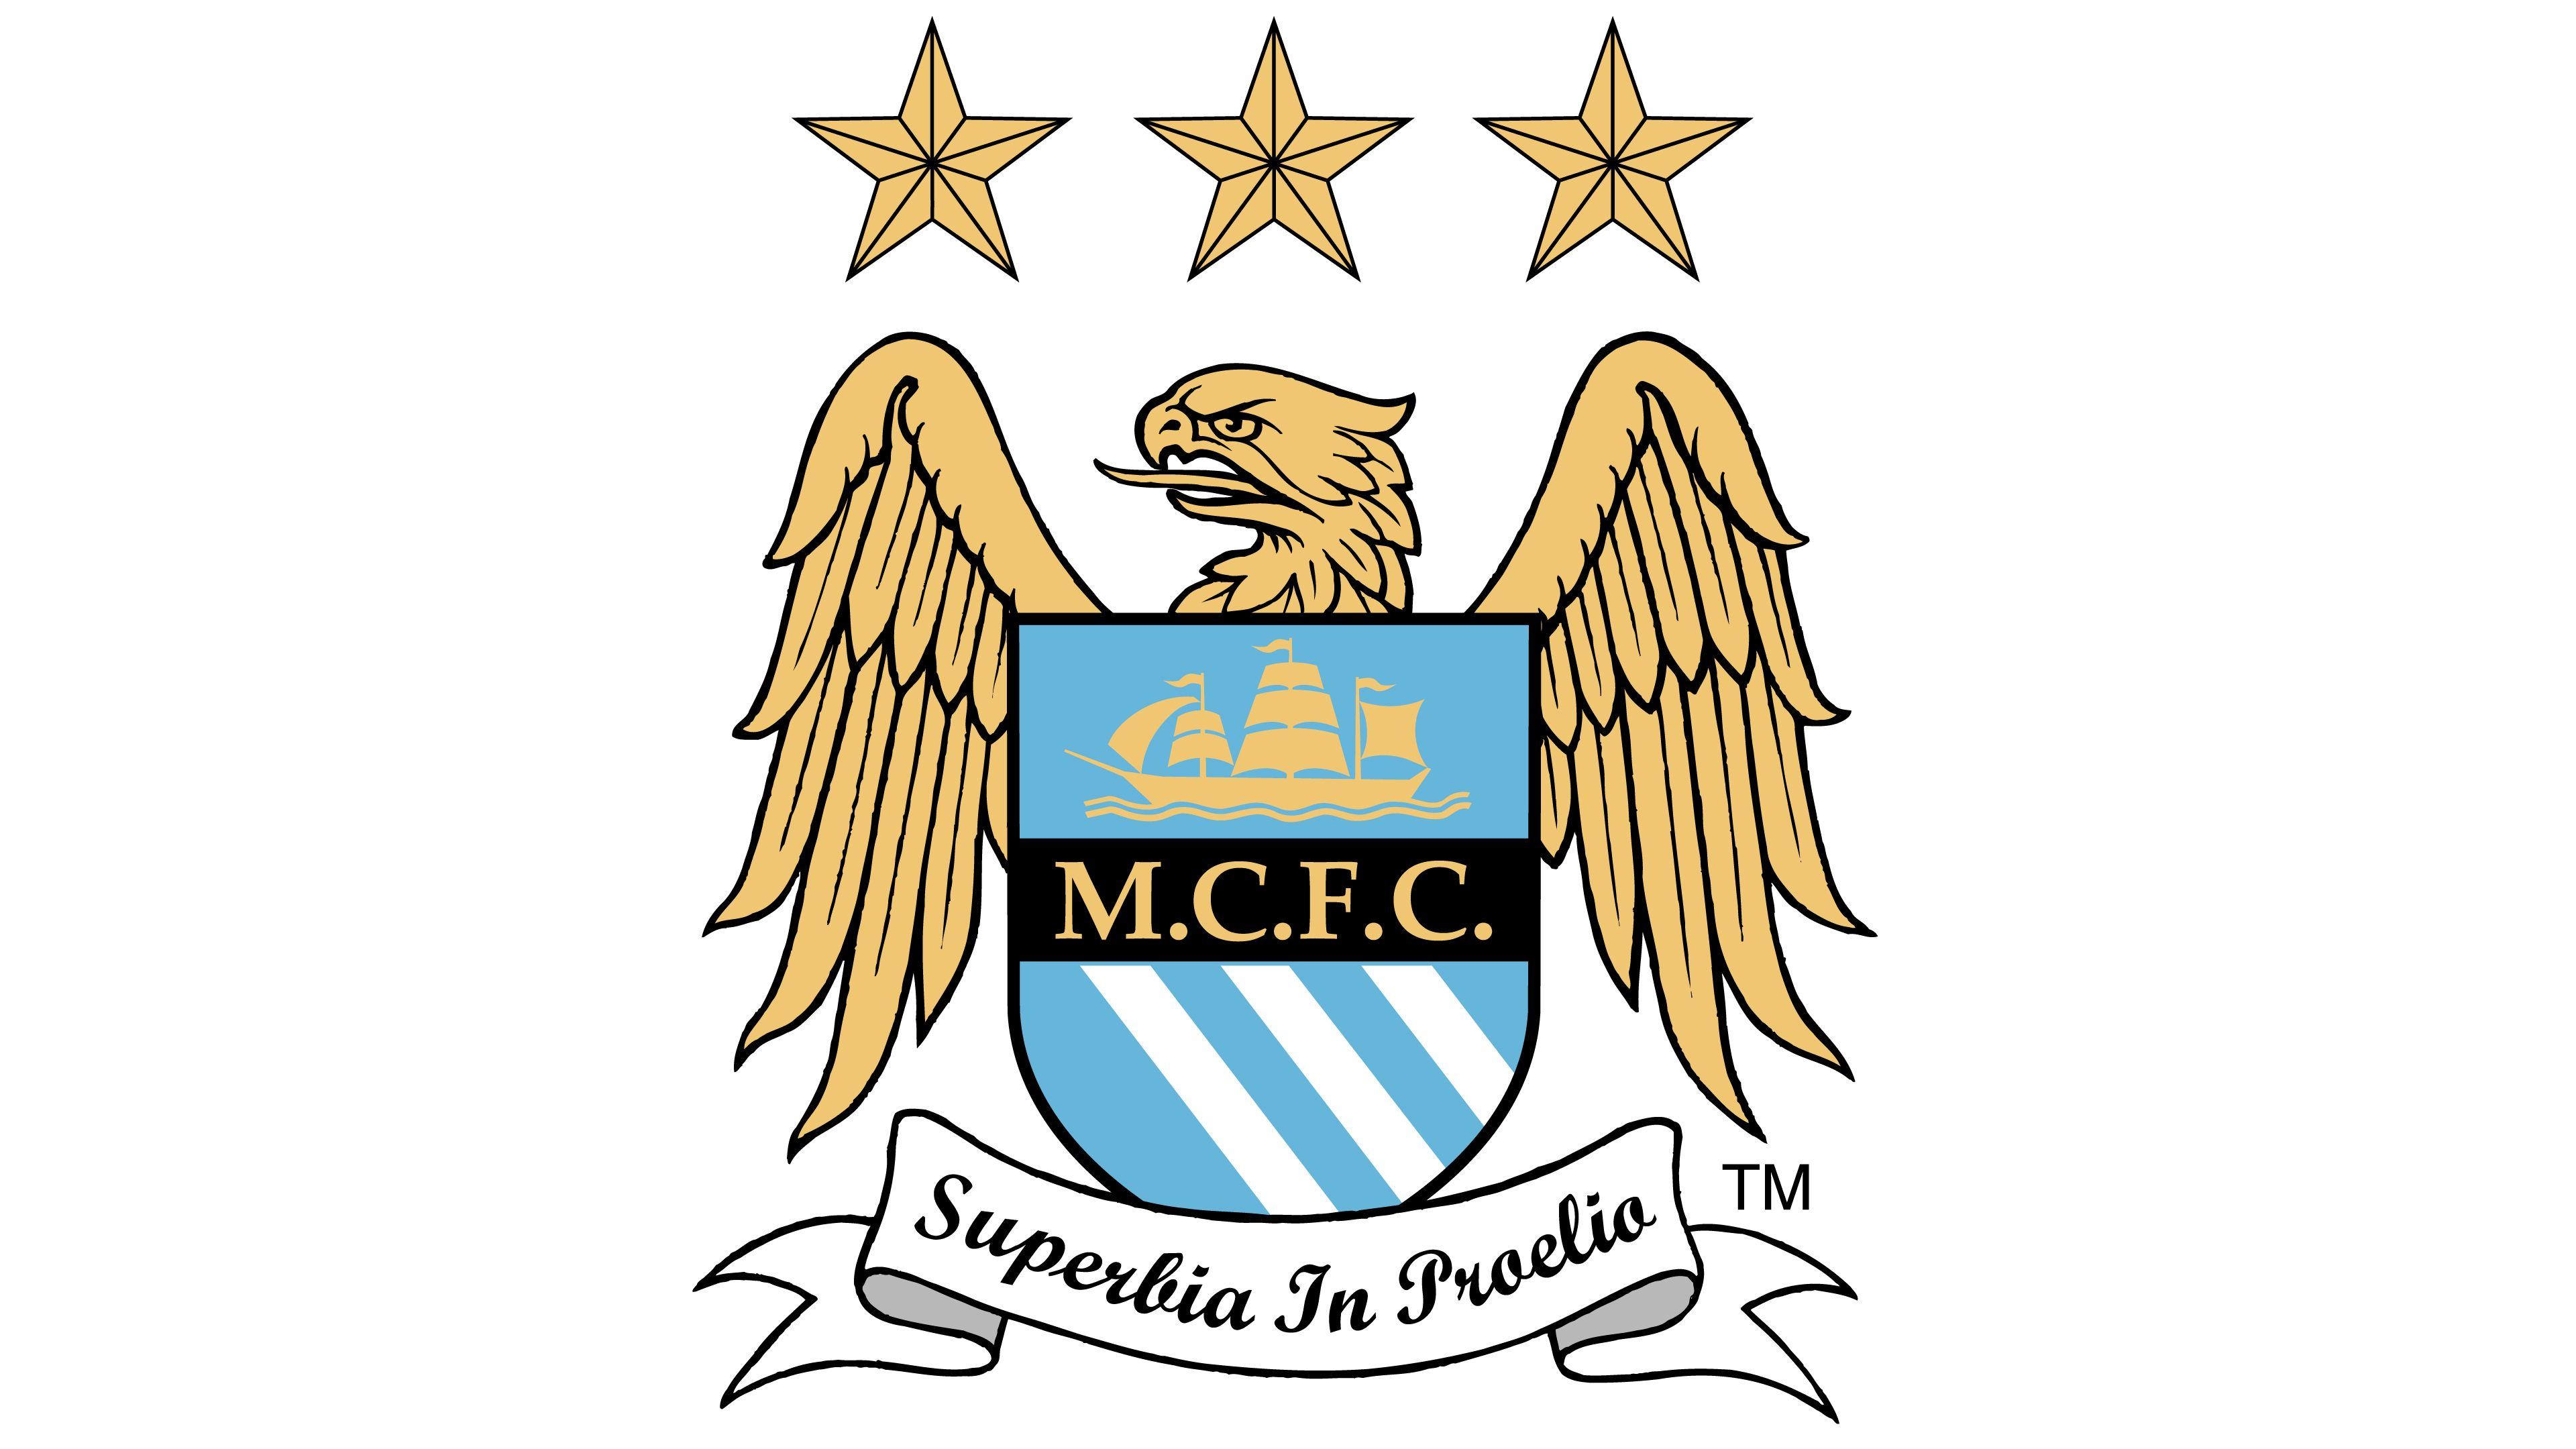 M.C.f.c Logo - Manchester City logo History of the Team Name and emblem